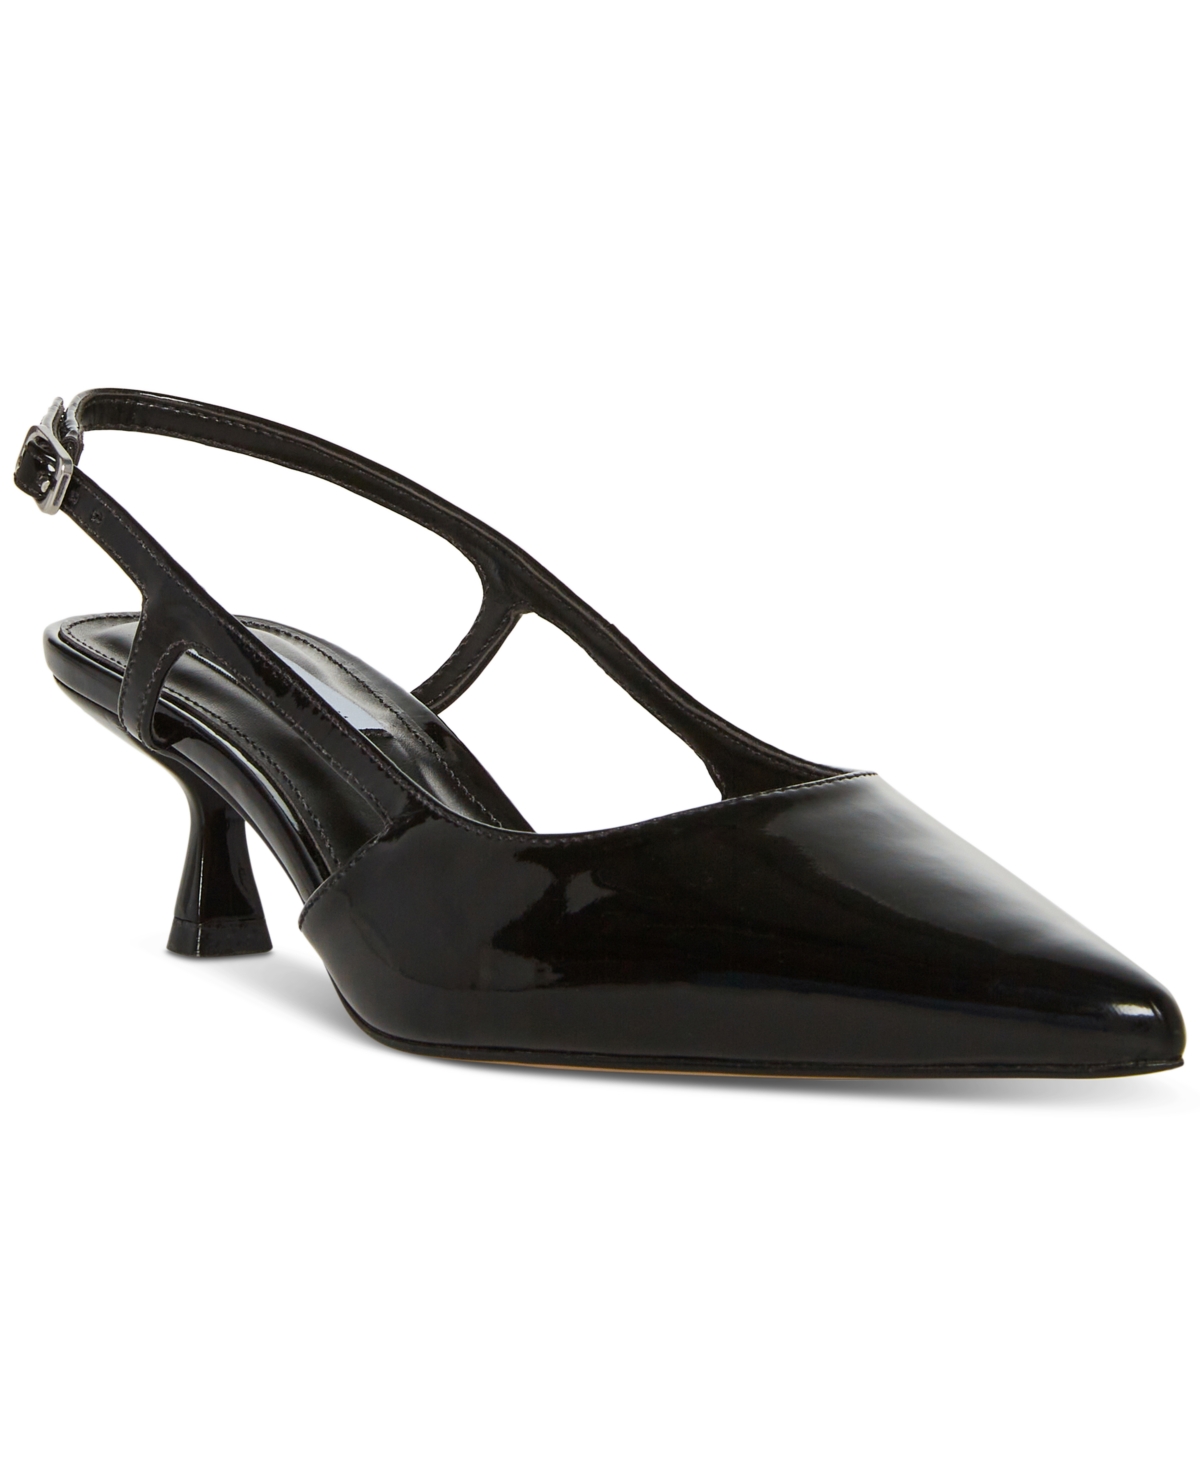 Women's Legaci Kitten-Heel Slingback Pumps - Black Patent